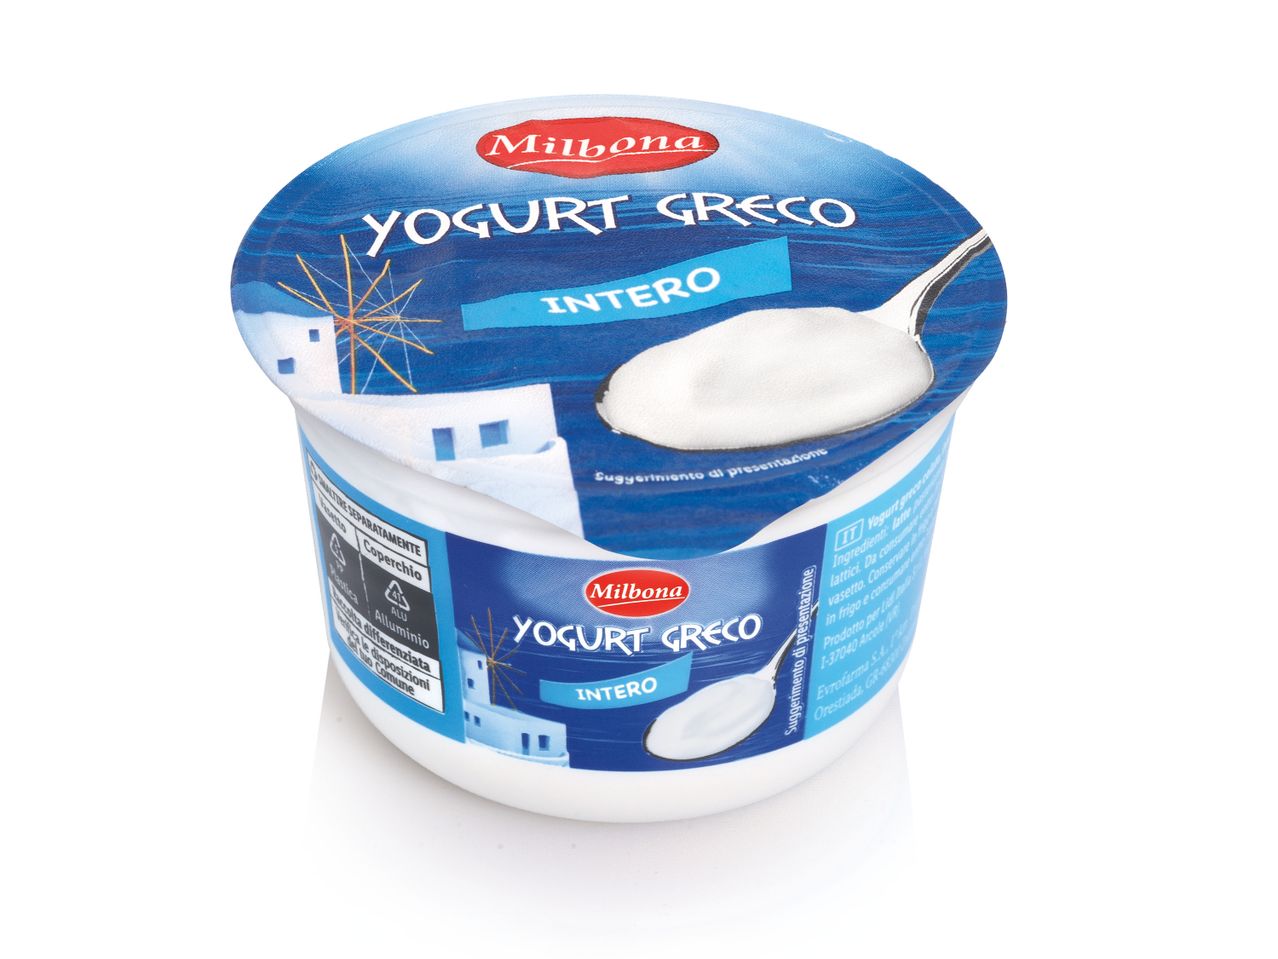 Go to full screen view: Greek Yoghurt - Image 1